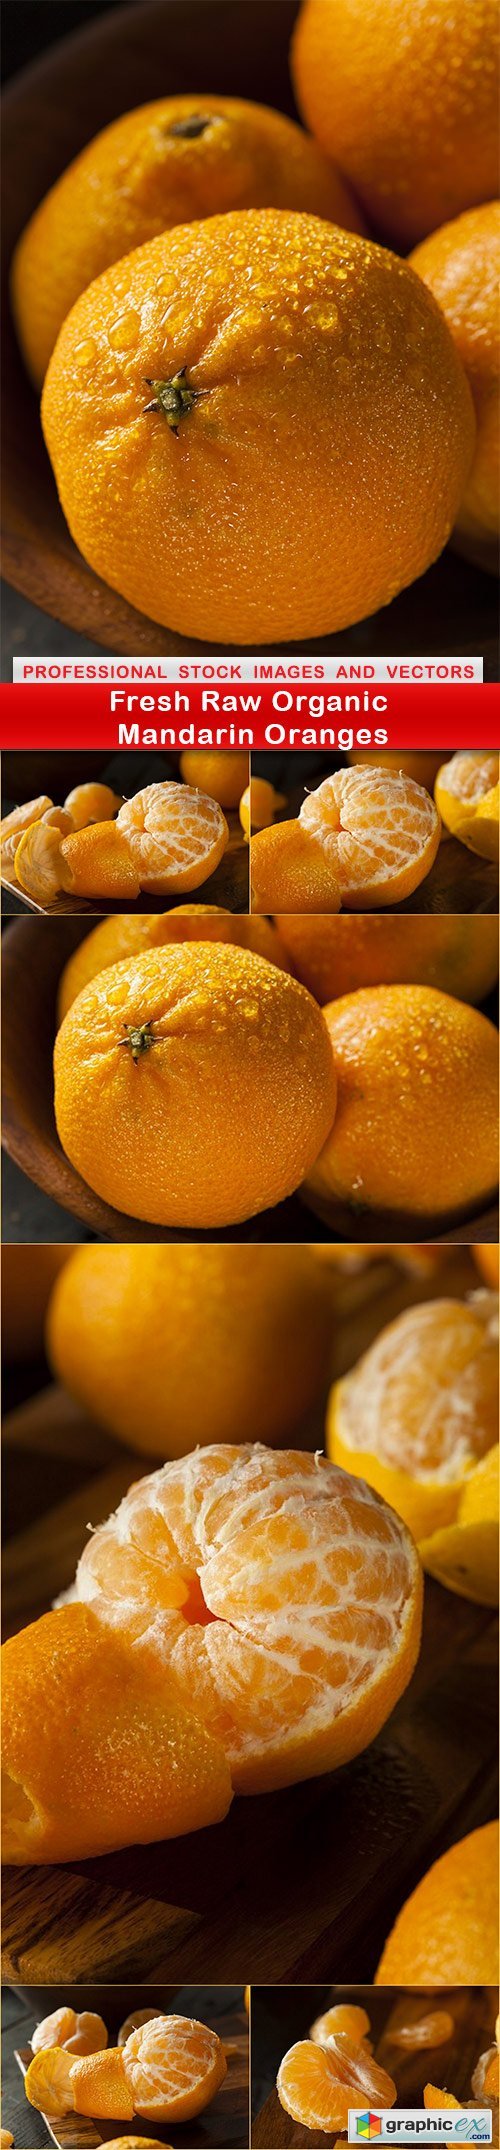 Fresh Raw Organic Mandarin Oranges - 7 UHQ JPEG